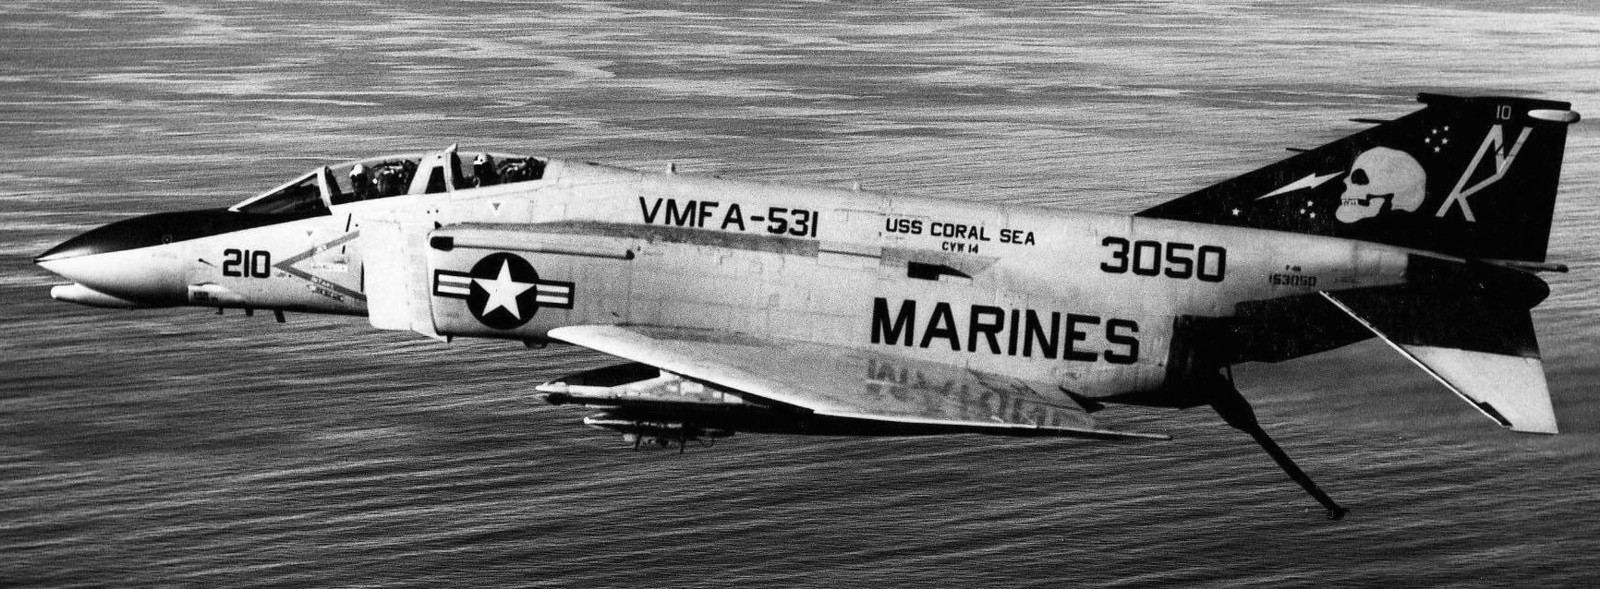 vmfa-531 grey ghosts marine fighter attack squadron f-4n phantom usmc 05